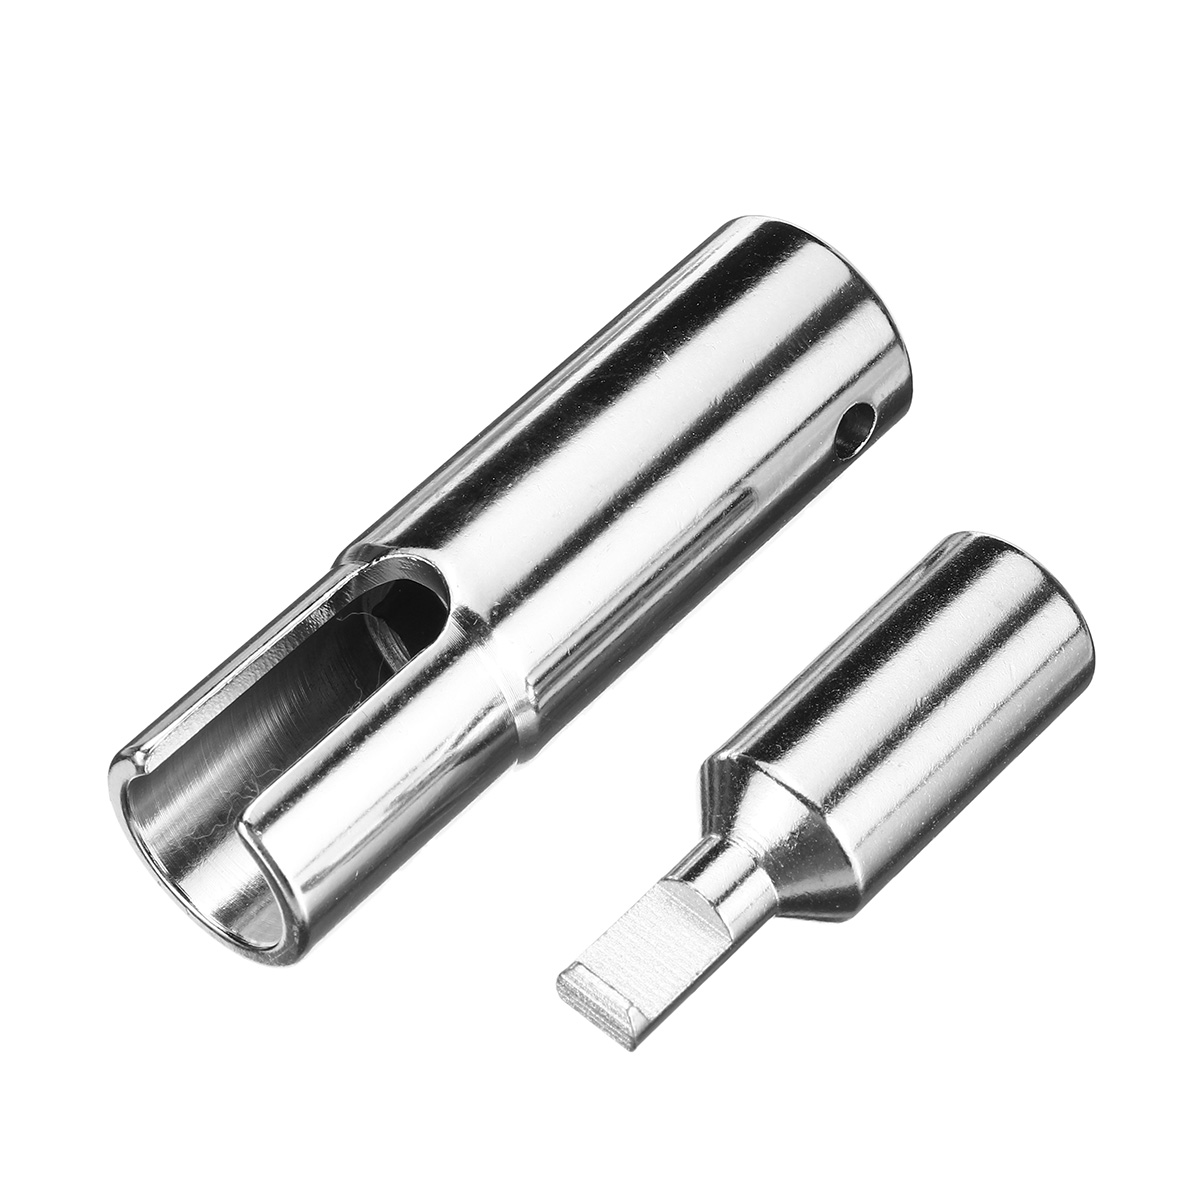 Locksmith-Supplies-Locksmith-Repair-Tools-Emergency-Lock-Cylinder-5-in-1-Twist-off-Consumables-1871446-2